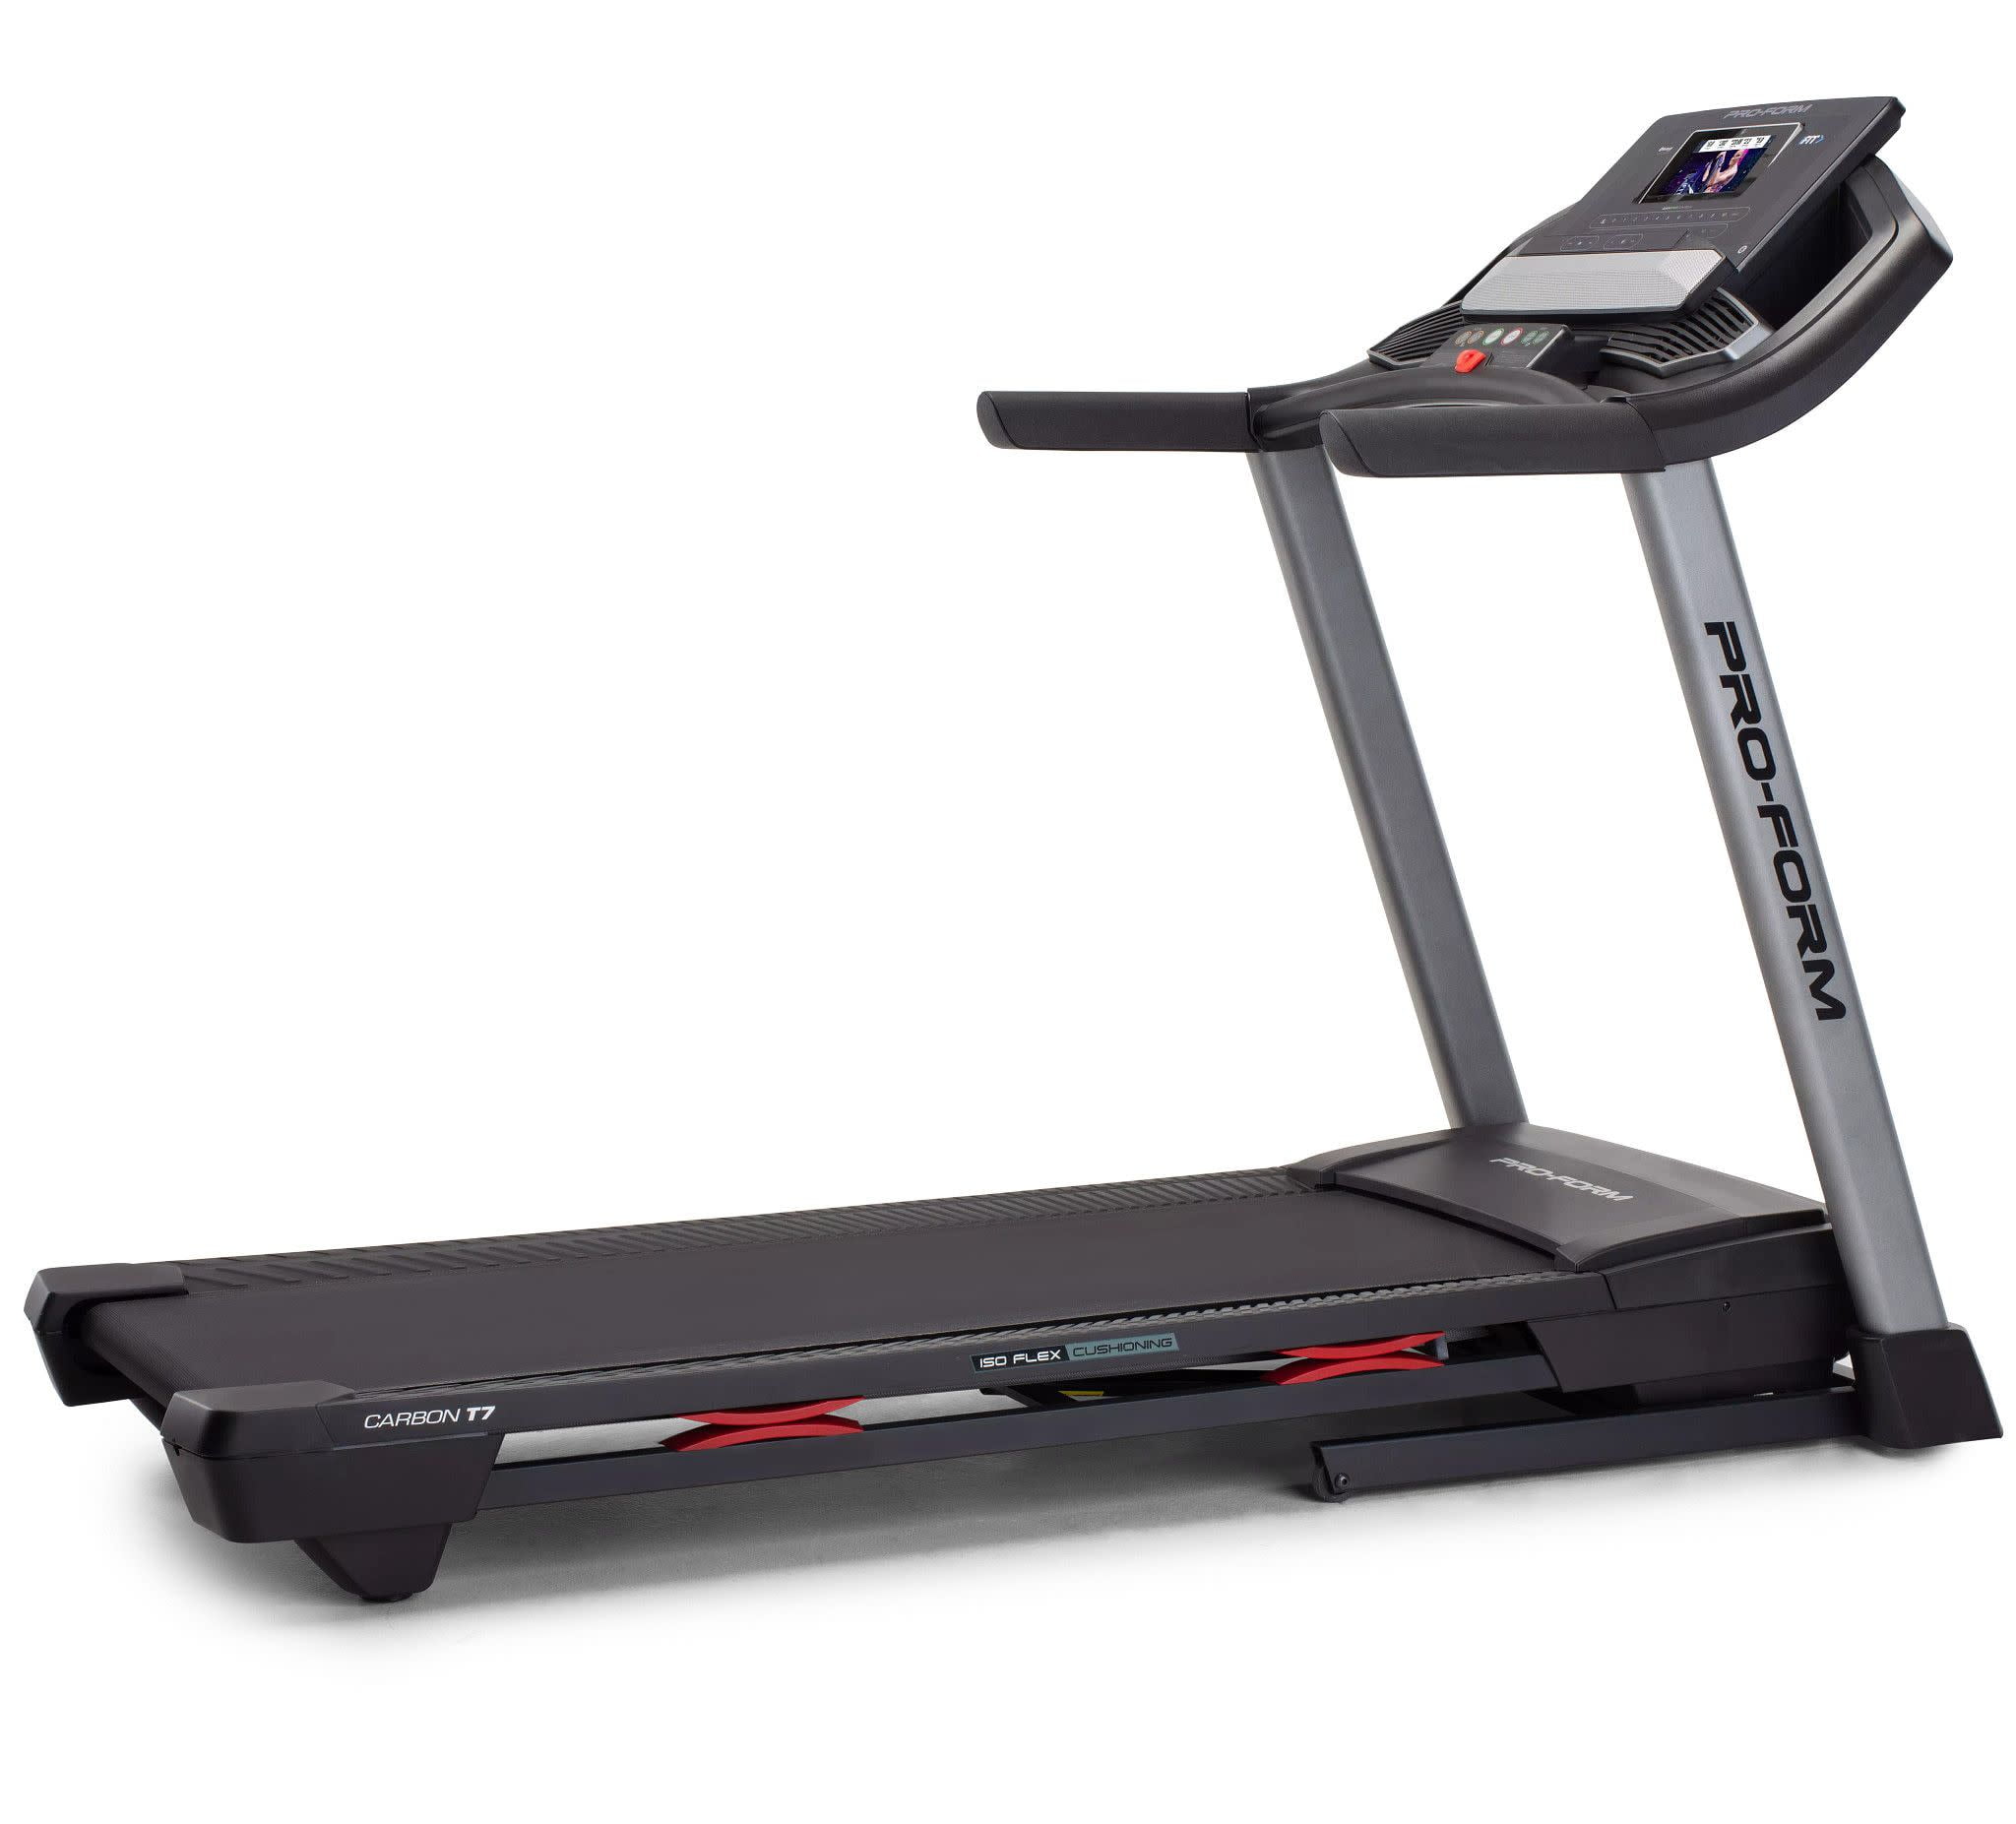 *New Replacement BELT* ProForm Healthy Heart Treadmill Model 535x 